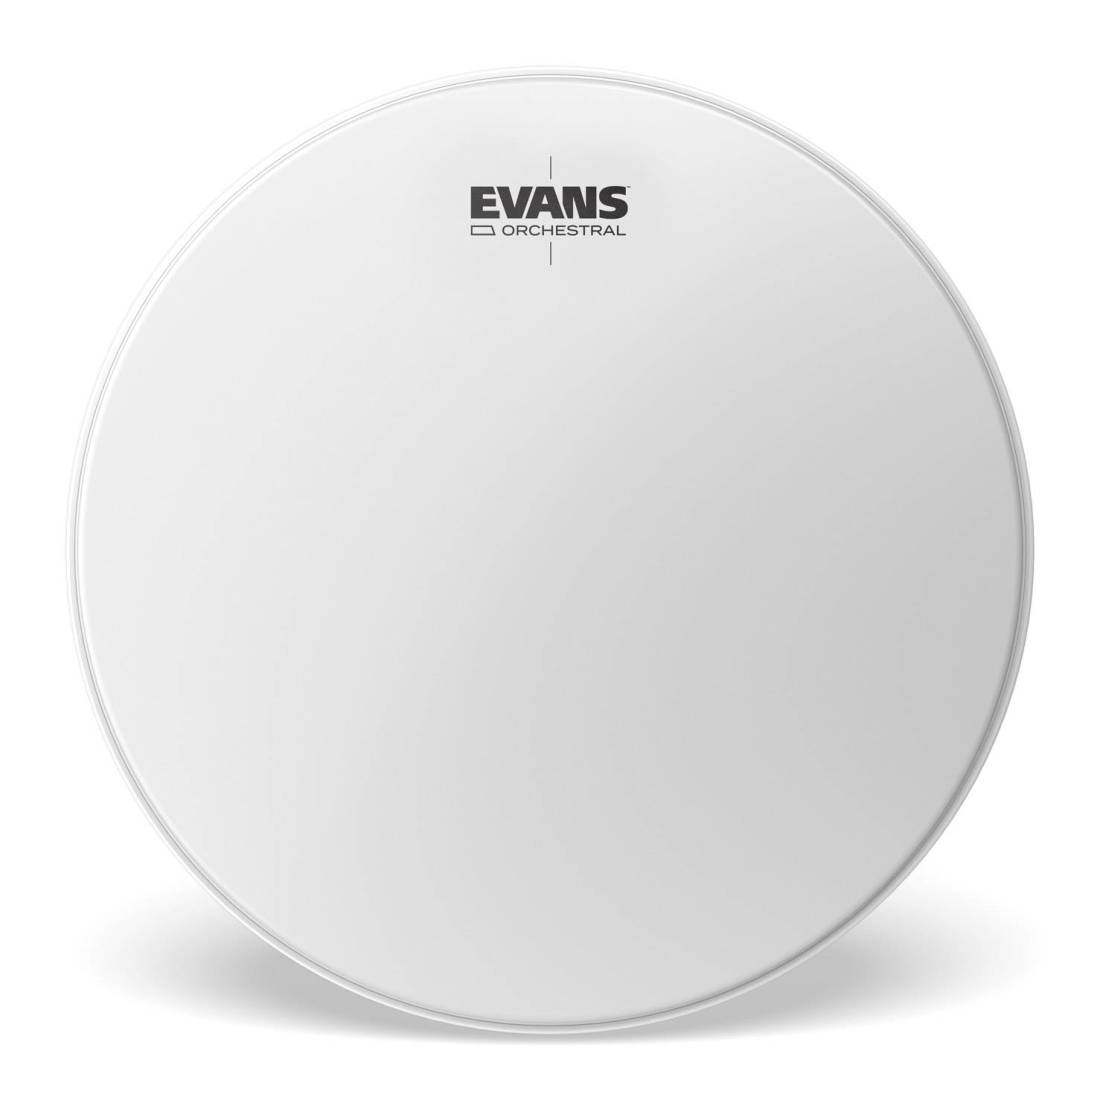 ET32 - Evans Orchestral Timpani Drum Head, 32 inch